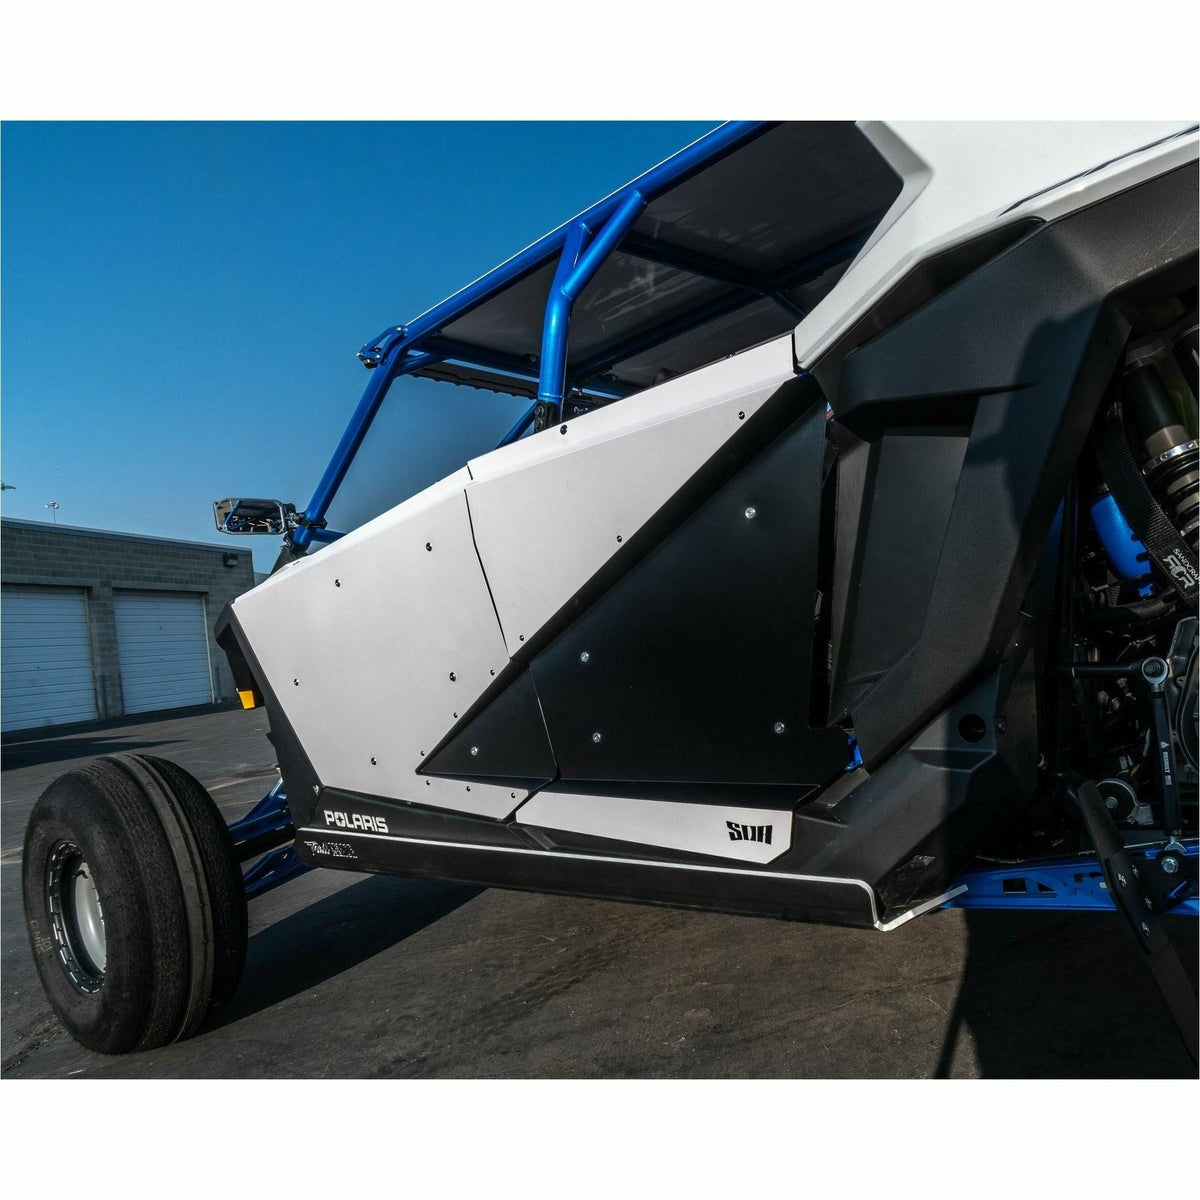 SDR Motorsports Polaris RZR PRO (4-Seat) Hi-Bred Full Doors